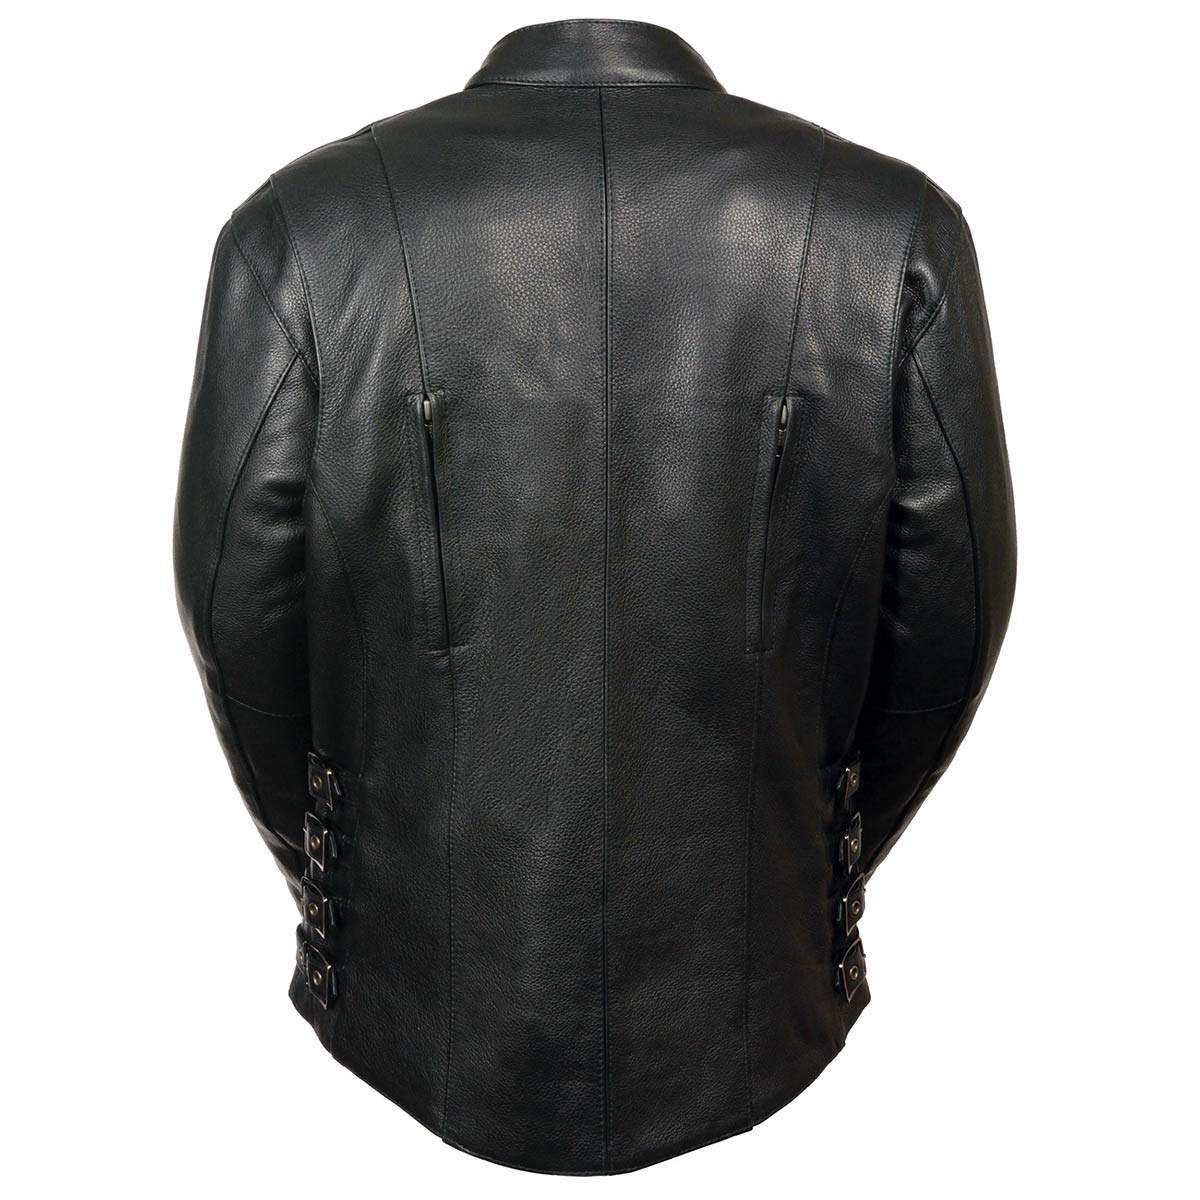 Milwaukee Leather MLL2520 Ladies Racer Black Leather Motorcycle Jacket